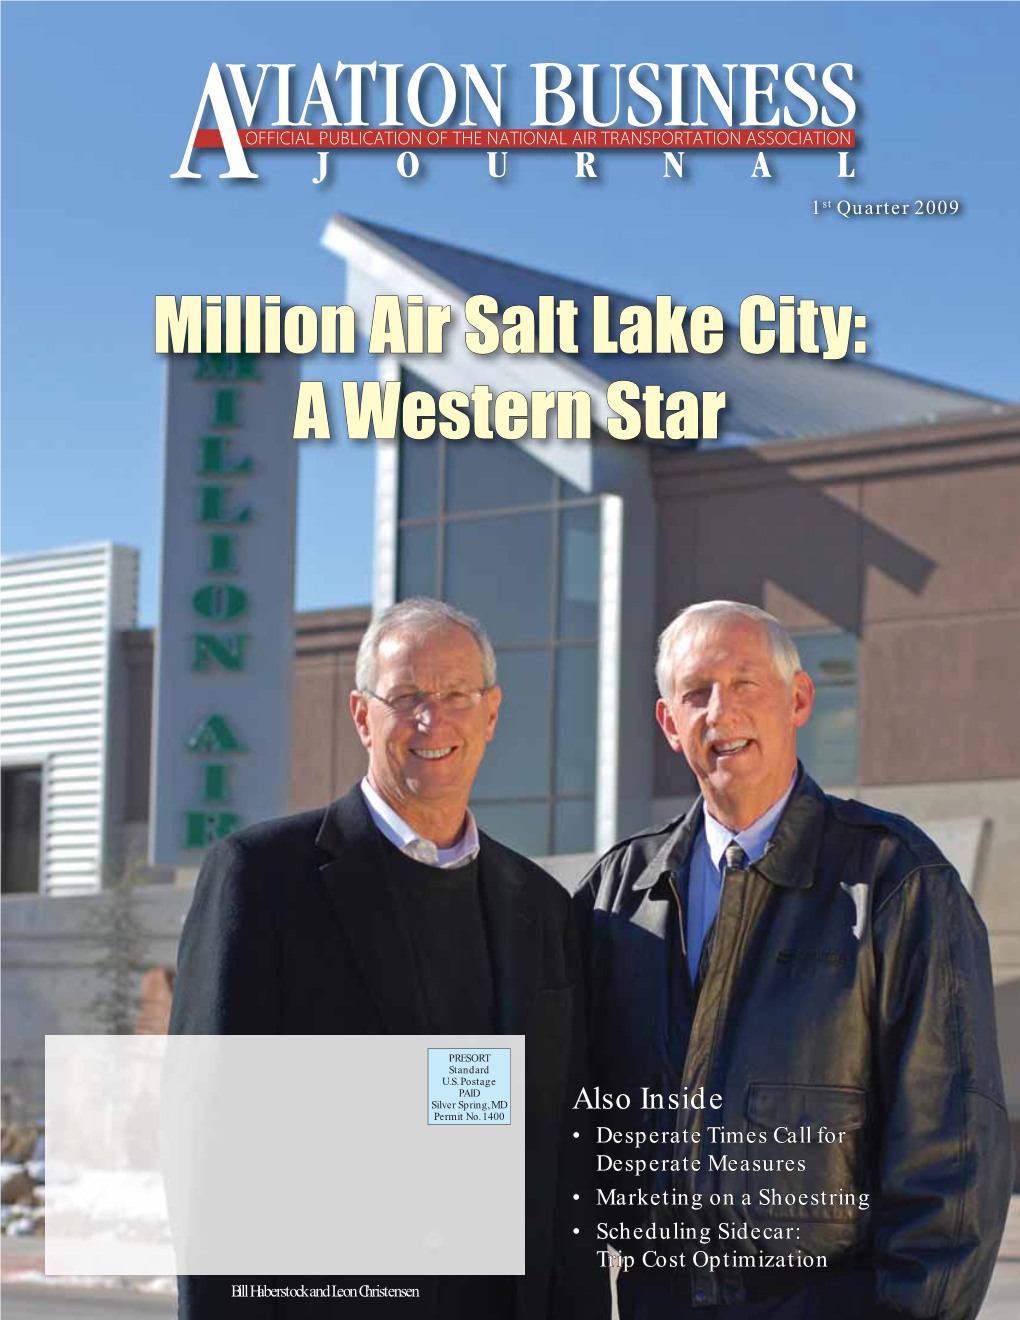 Million Air Salt Lake City: a Western Star by Paul Seidenman and David J